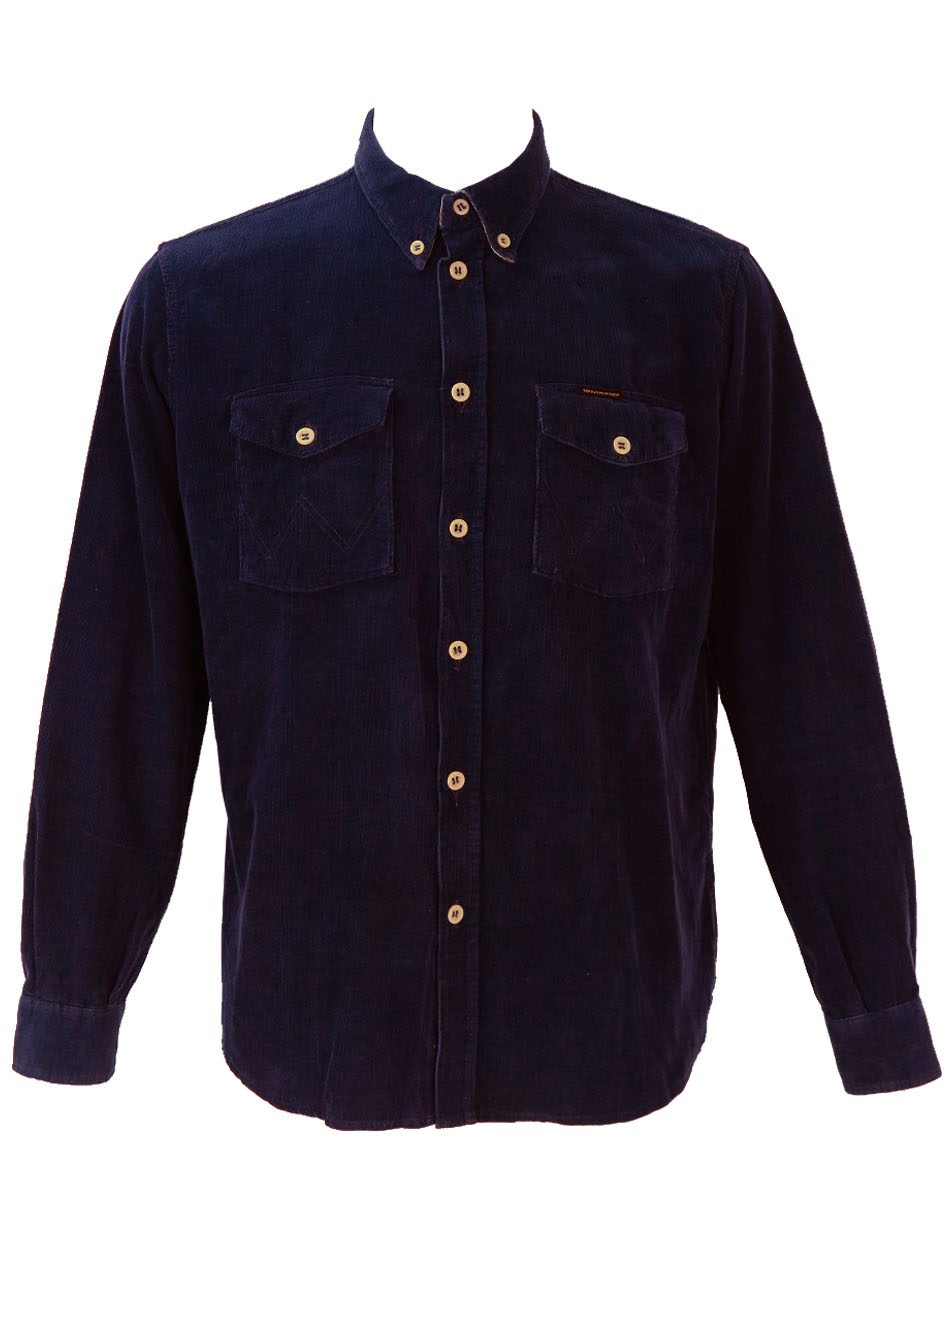 Wrangler Blue Corduroy Shirt - M/L | Reign Vintage